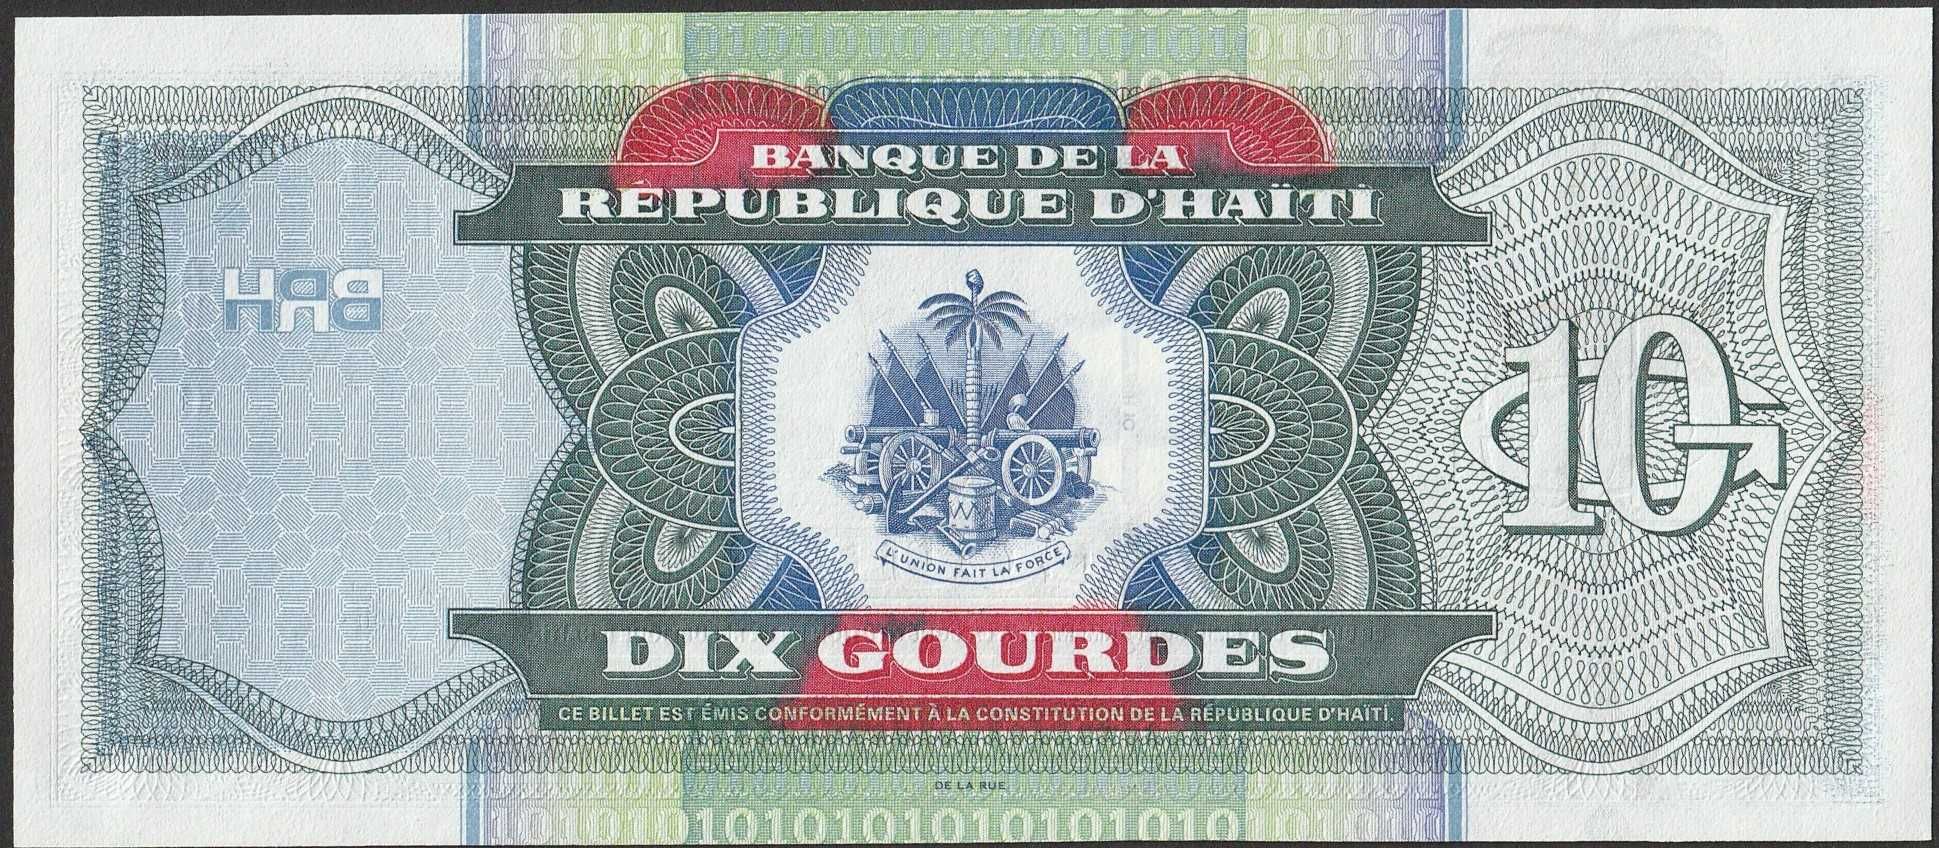 Haiti 10 gourdes 2000 - AW - stan bankowy UNC